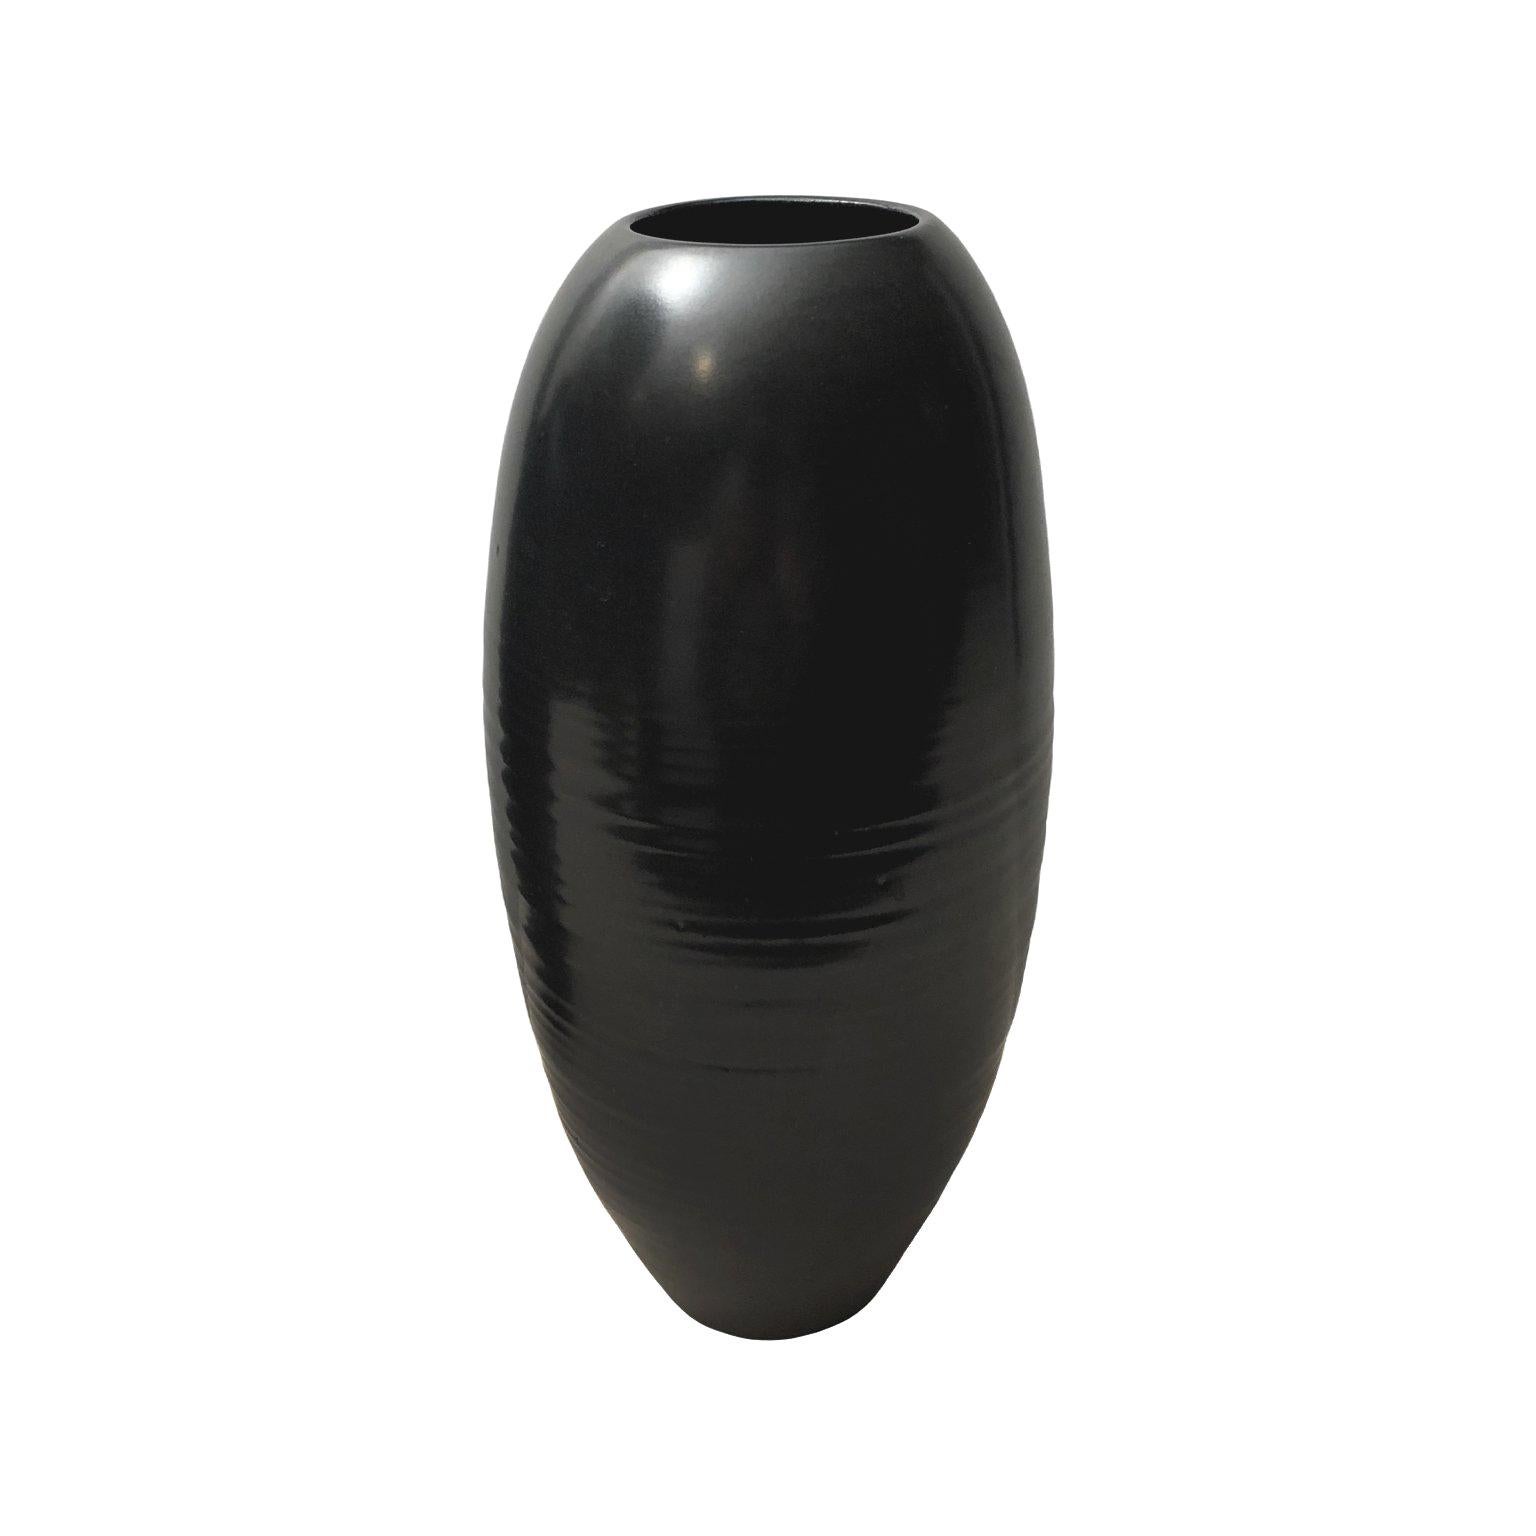 Tall Ceramic Pointed Base Ripple Vase with Black Lustre Glaze by Sandi Fellman For Sale